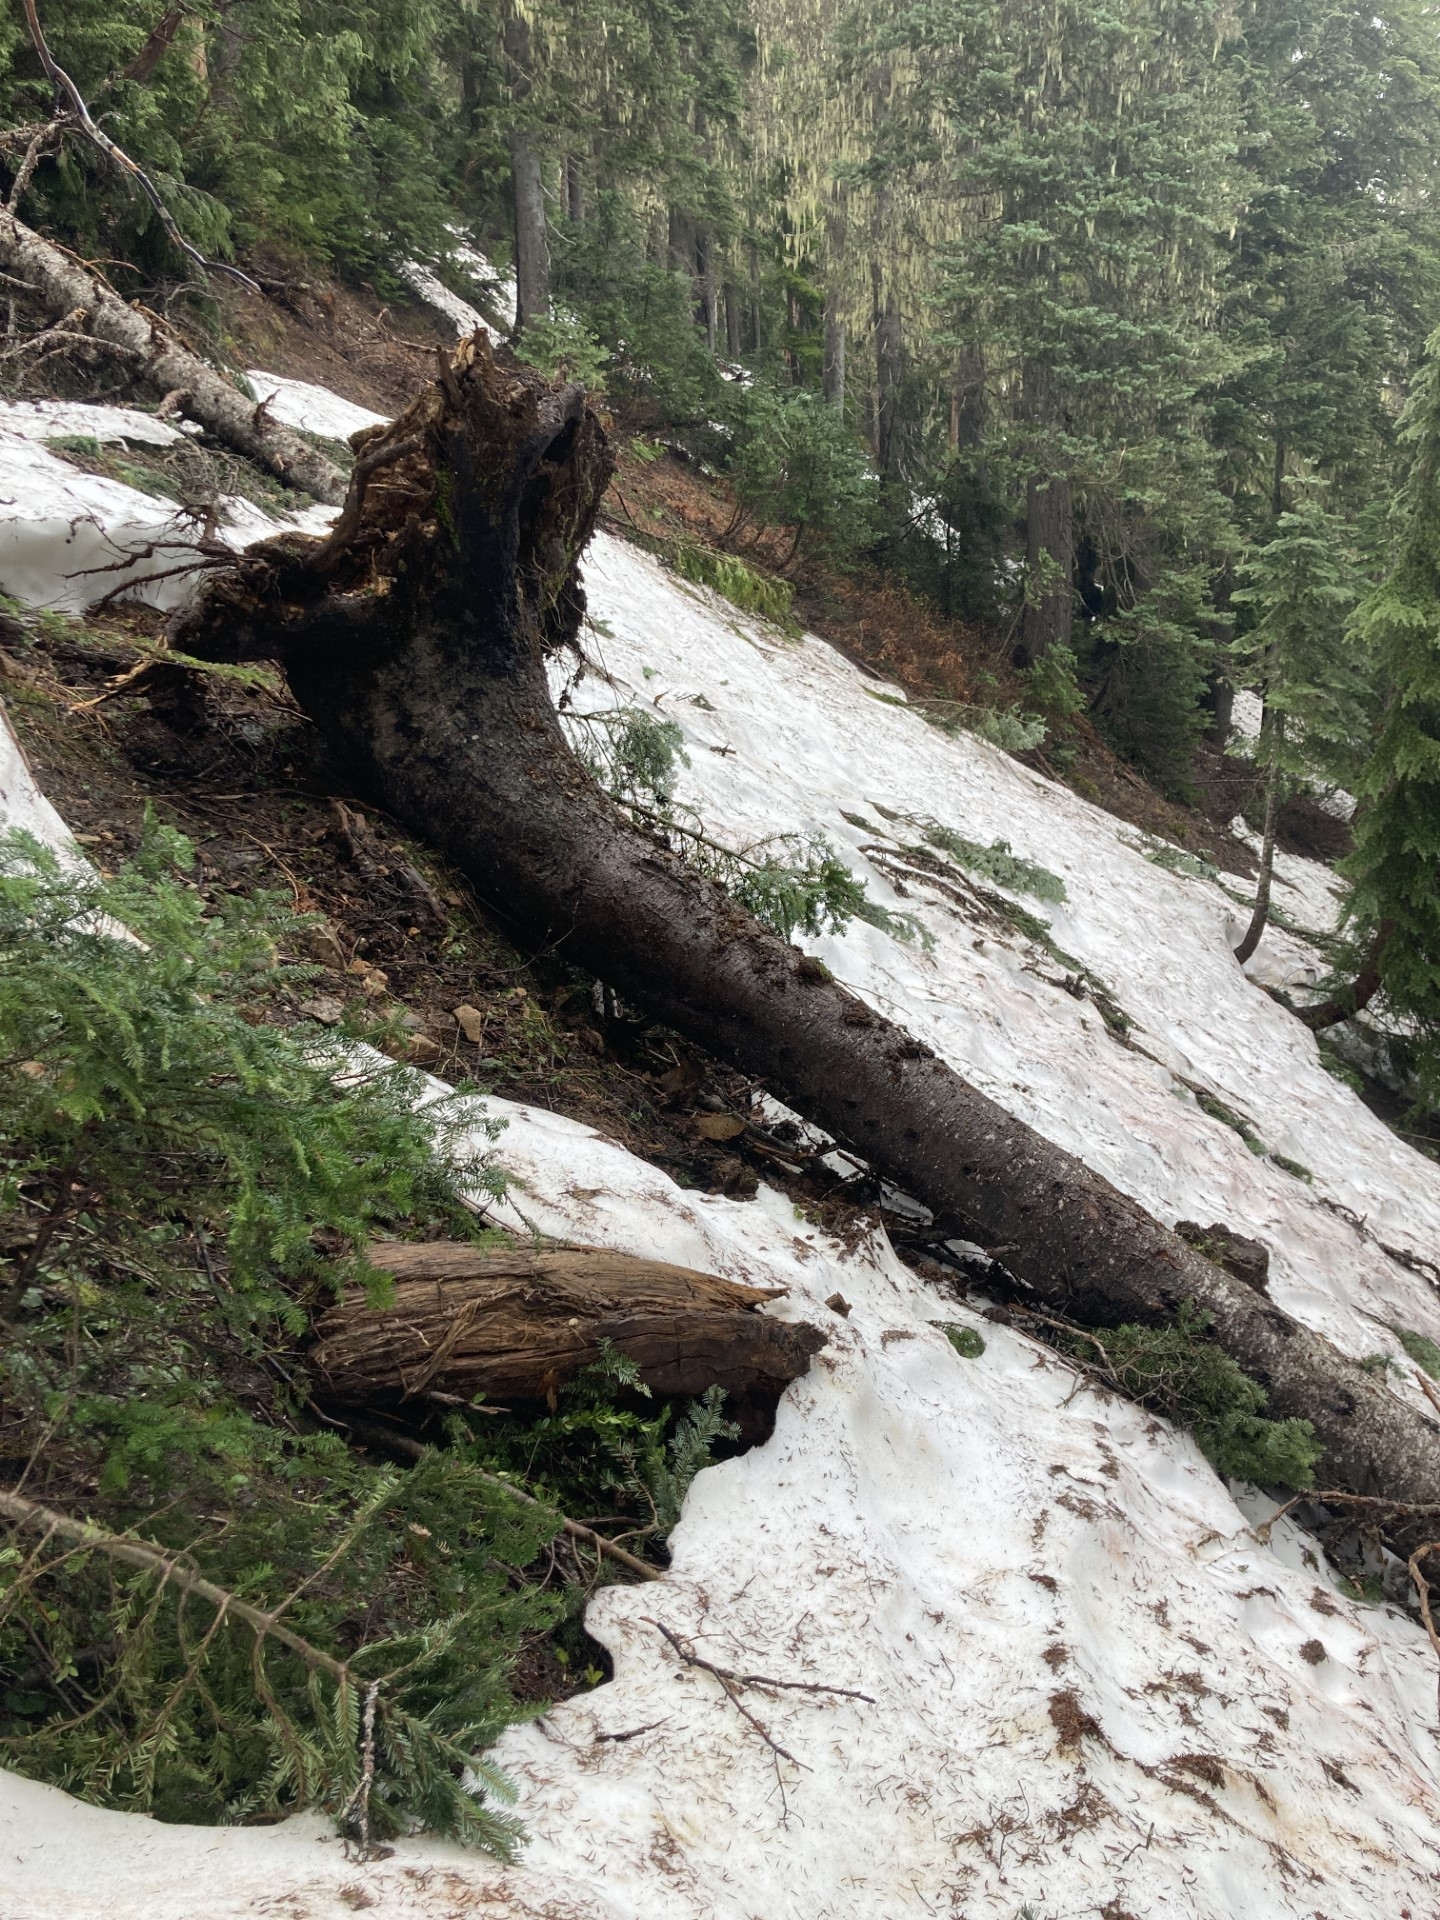 Sourdough trail early season conditions. Not glamorous, but realistic. photo NPS/J. Strandwitz